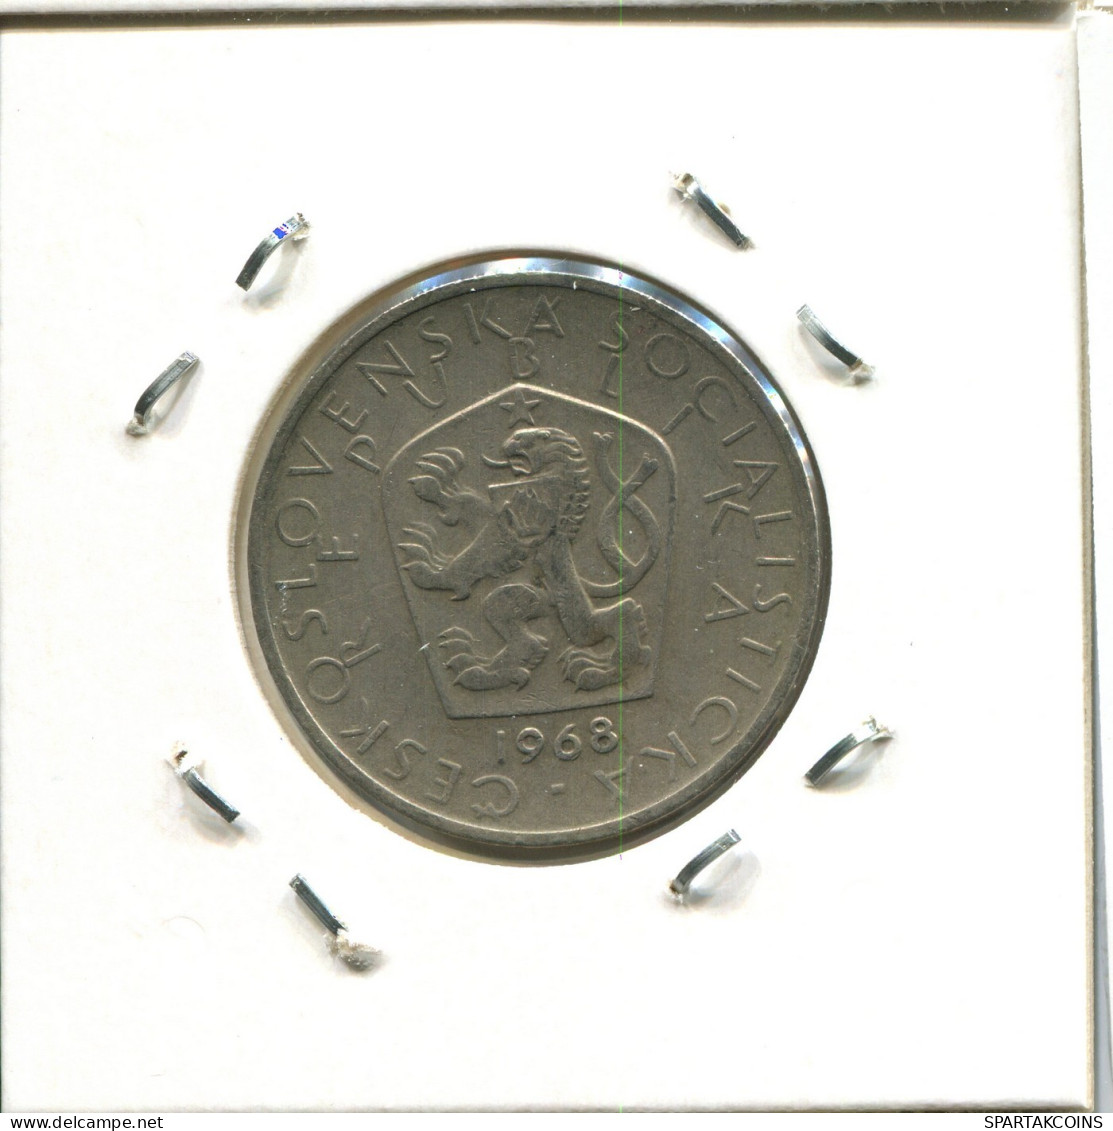 5 KORUN 1968 TSCHECHOSLOWAKEI CZECHOSLOWAKEI SLOVAKIA Münze #AW848.D.A - Tschechoslowakei